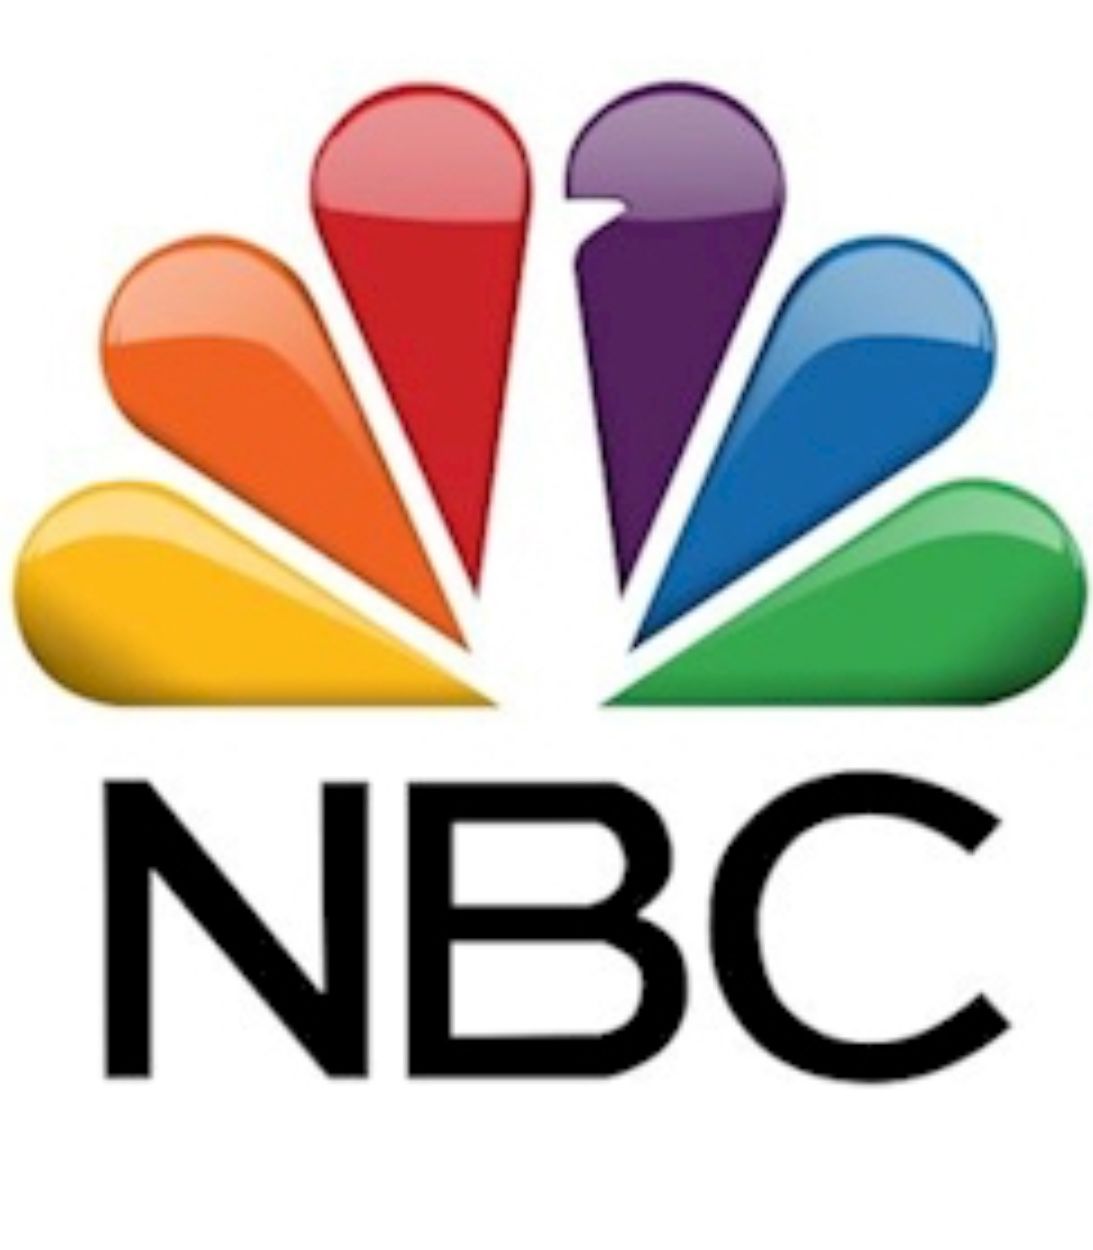 NBC logo vertical